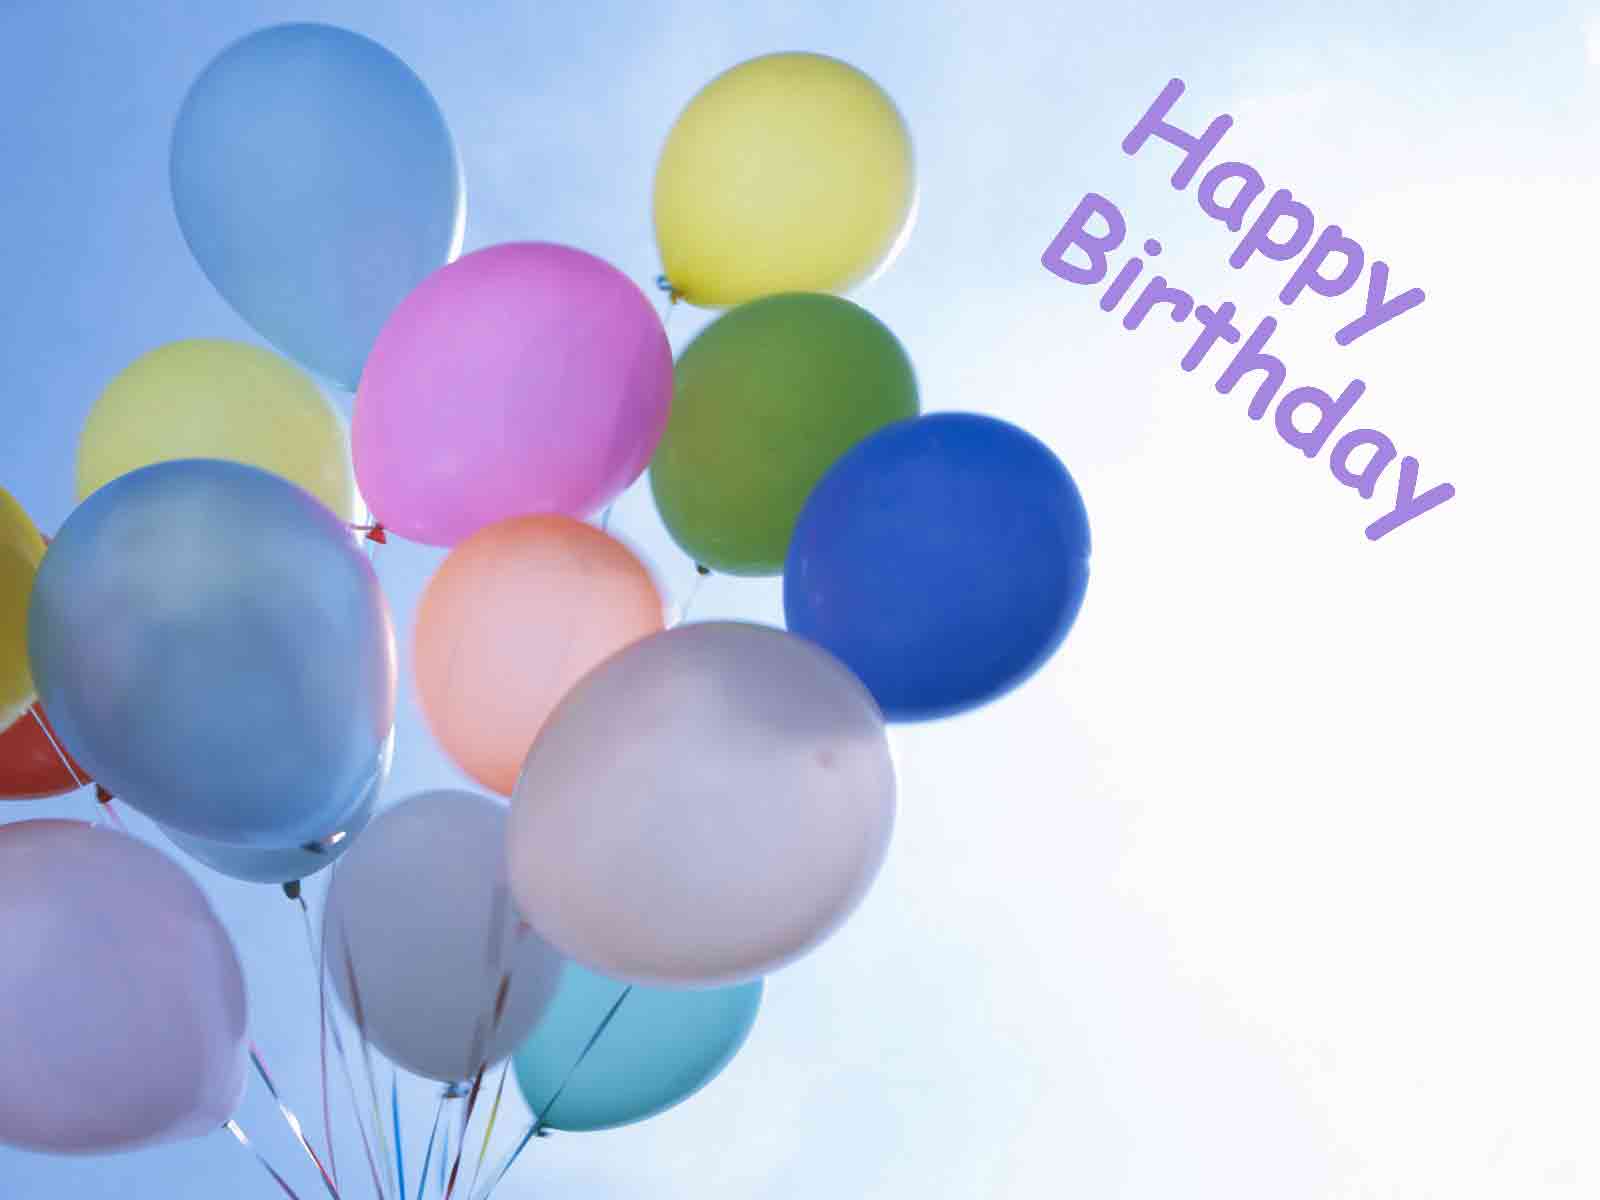 Happy Birthday Balloon Bunch 309955 Image HD Wallpaper. Wallfoy.com